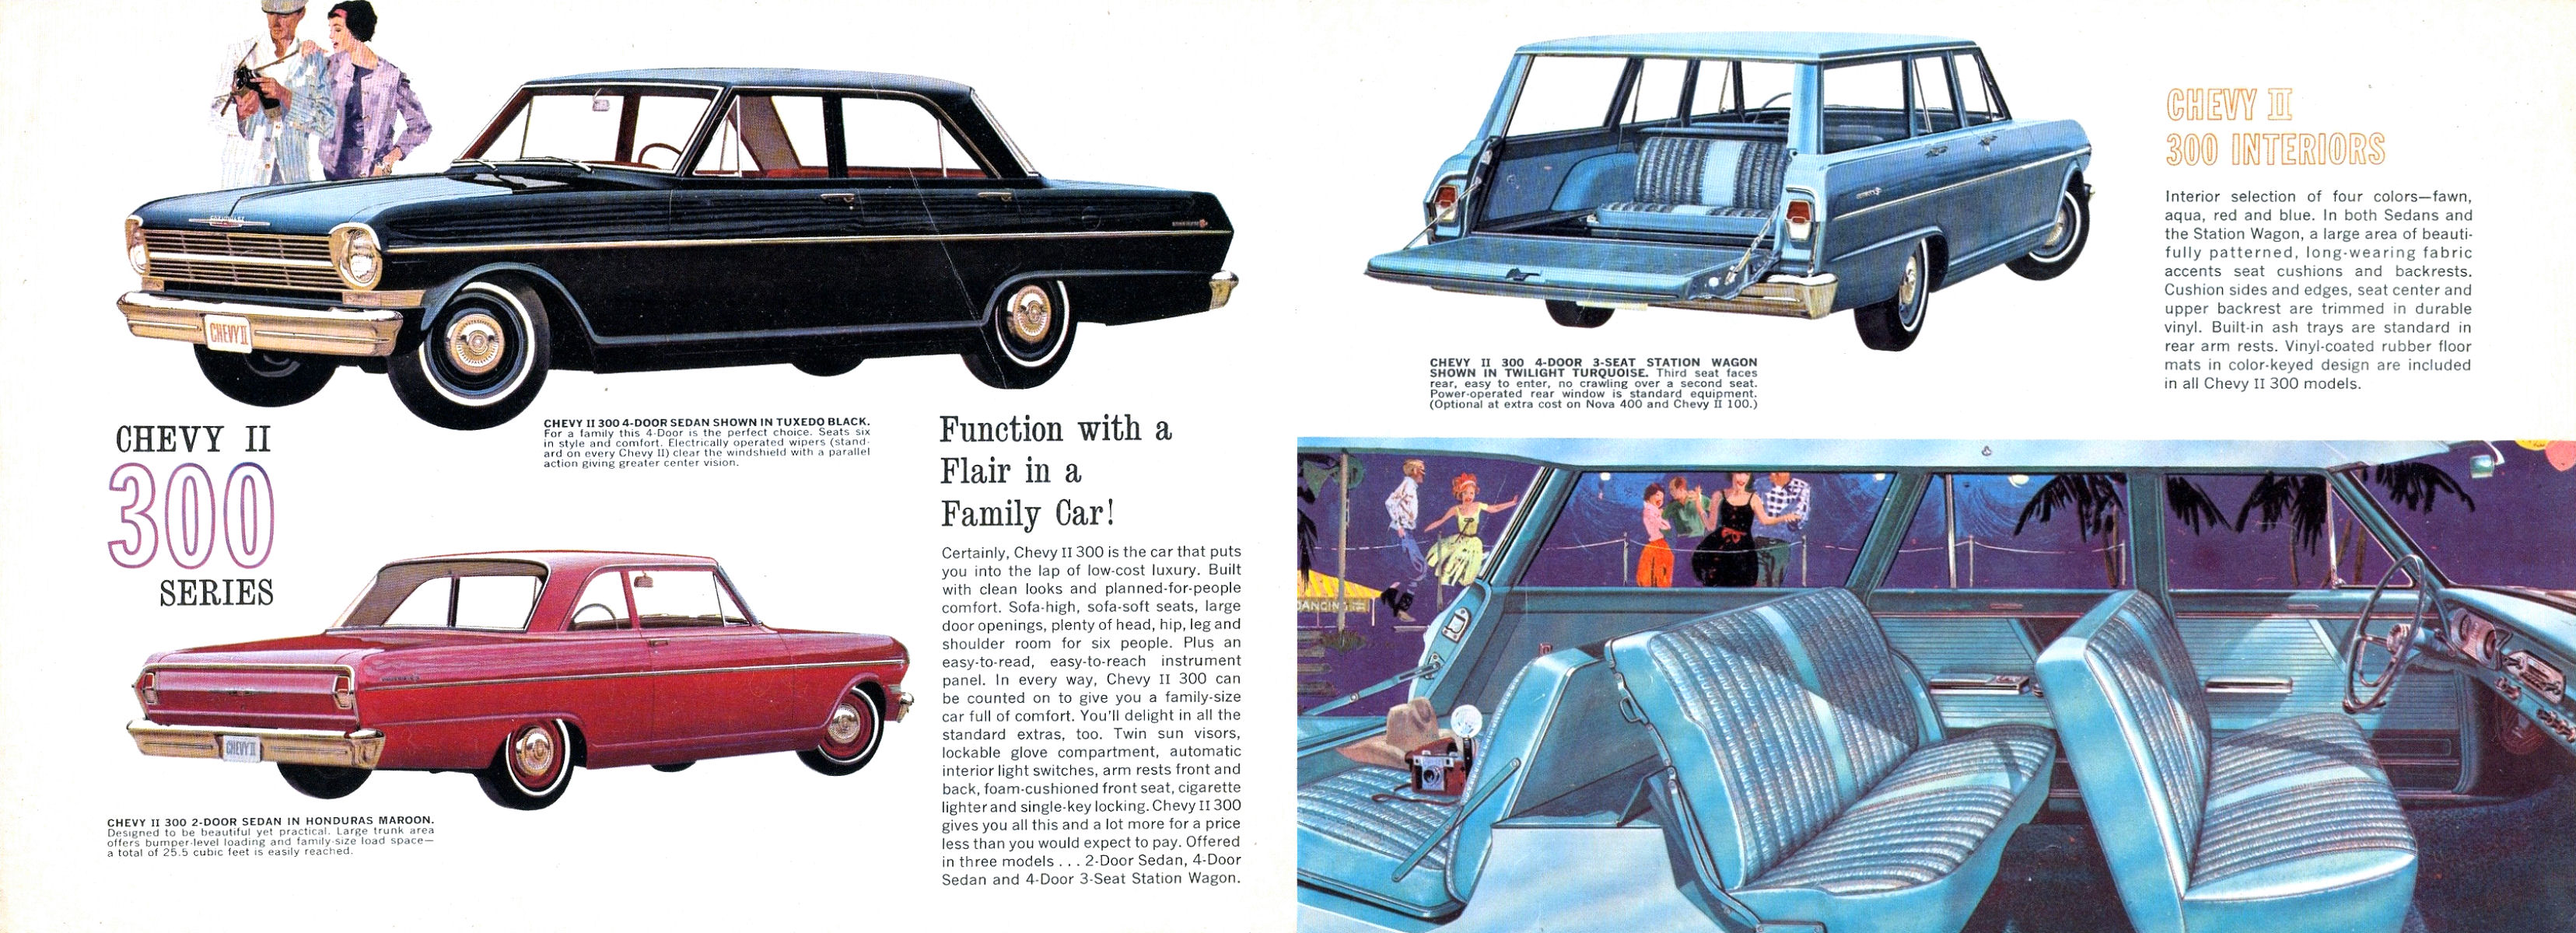 1962_Chevrolet_Chevy_II_R1-06-07